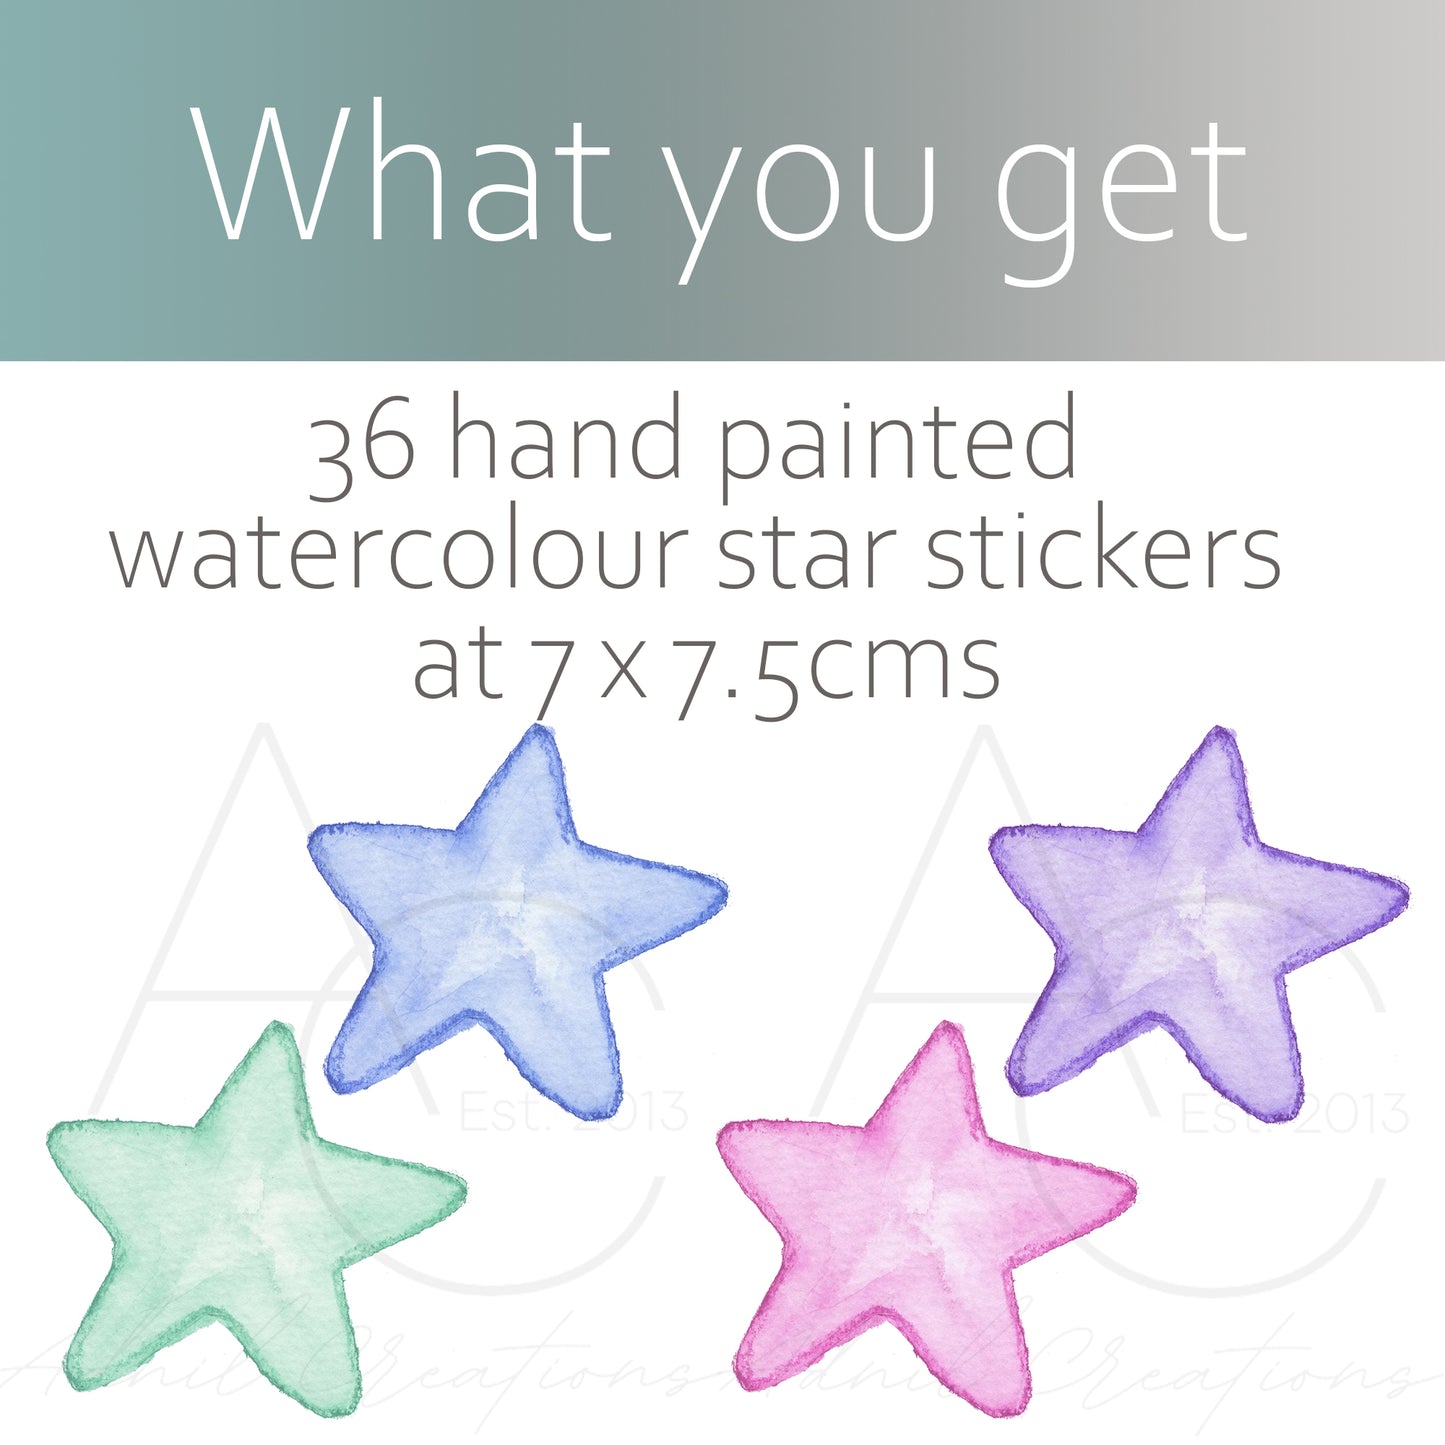 Watercolour stars | Fabric wall stickers